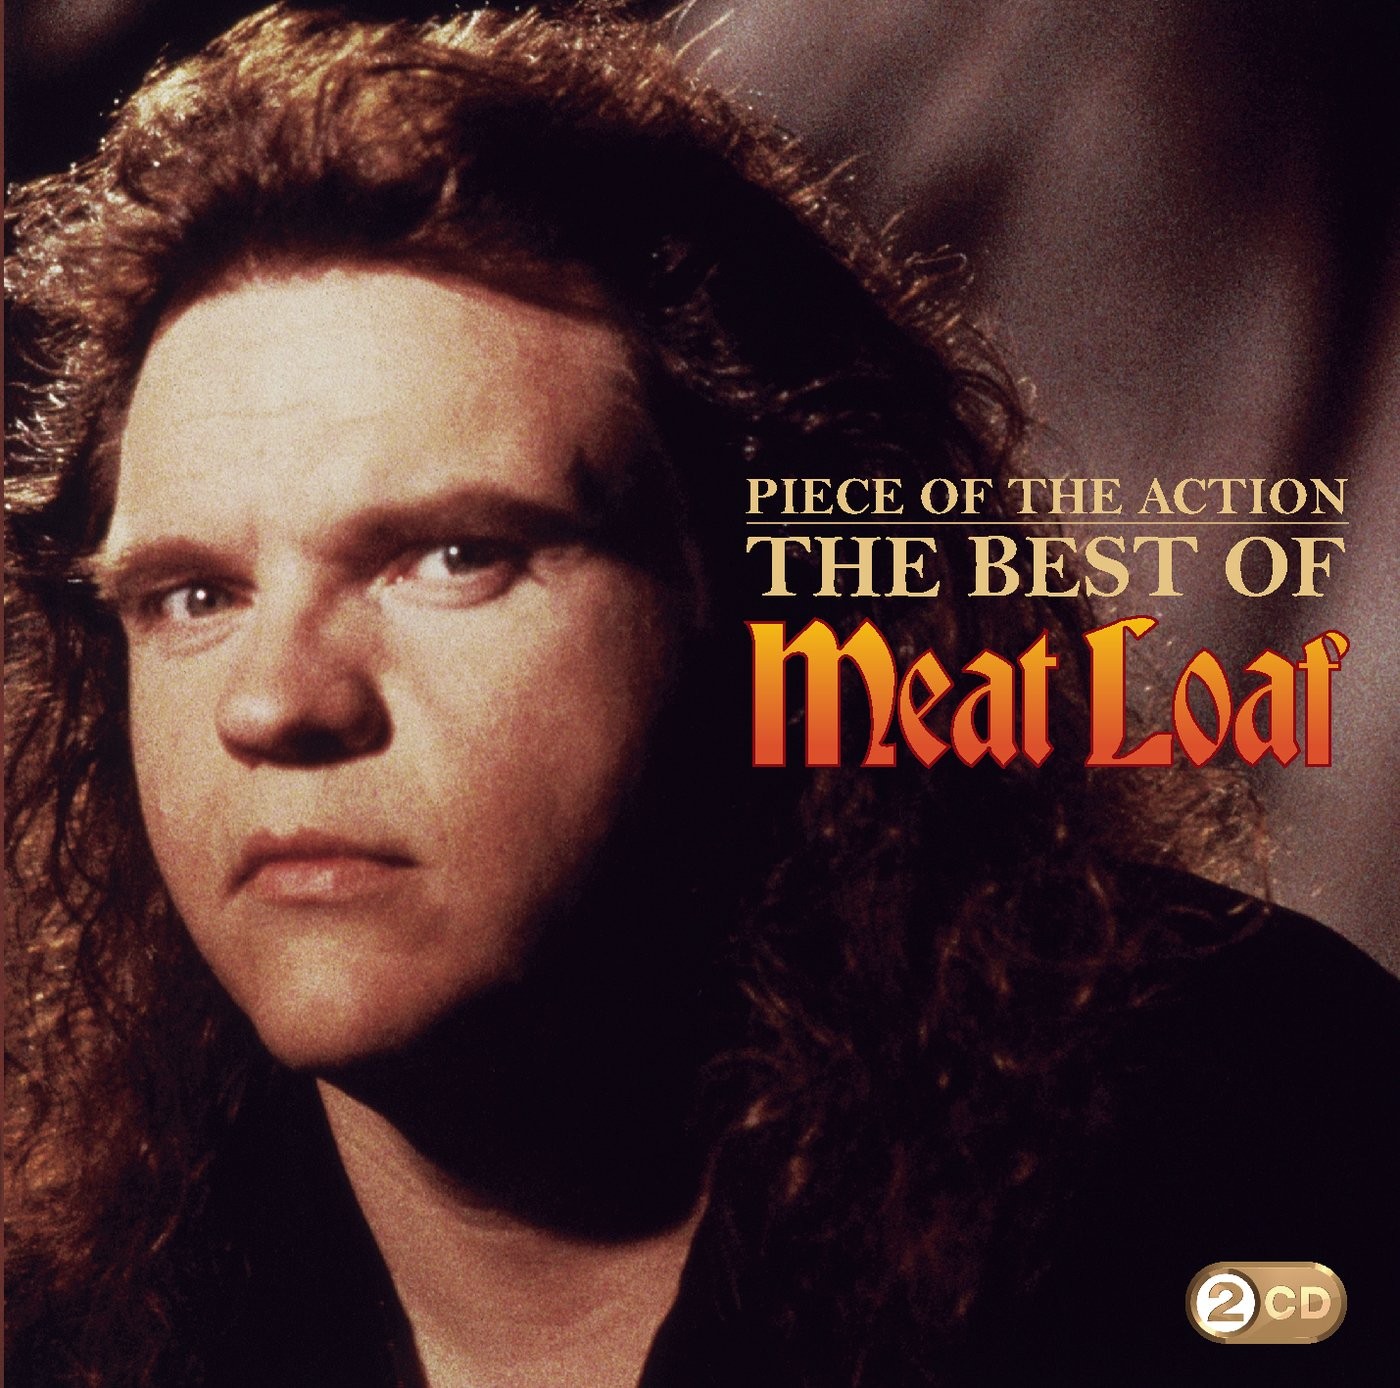 Meat Loaf morre aos 74 anos: veja FOTOS da carreira thumbnail